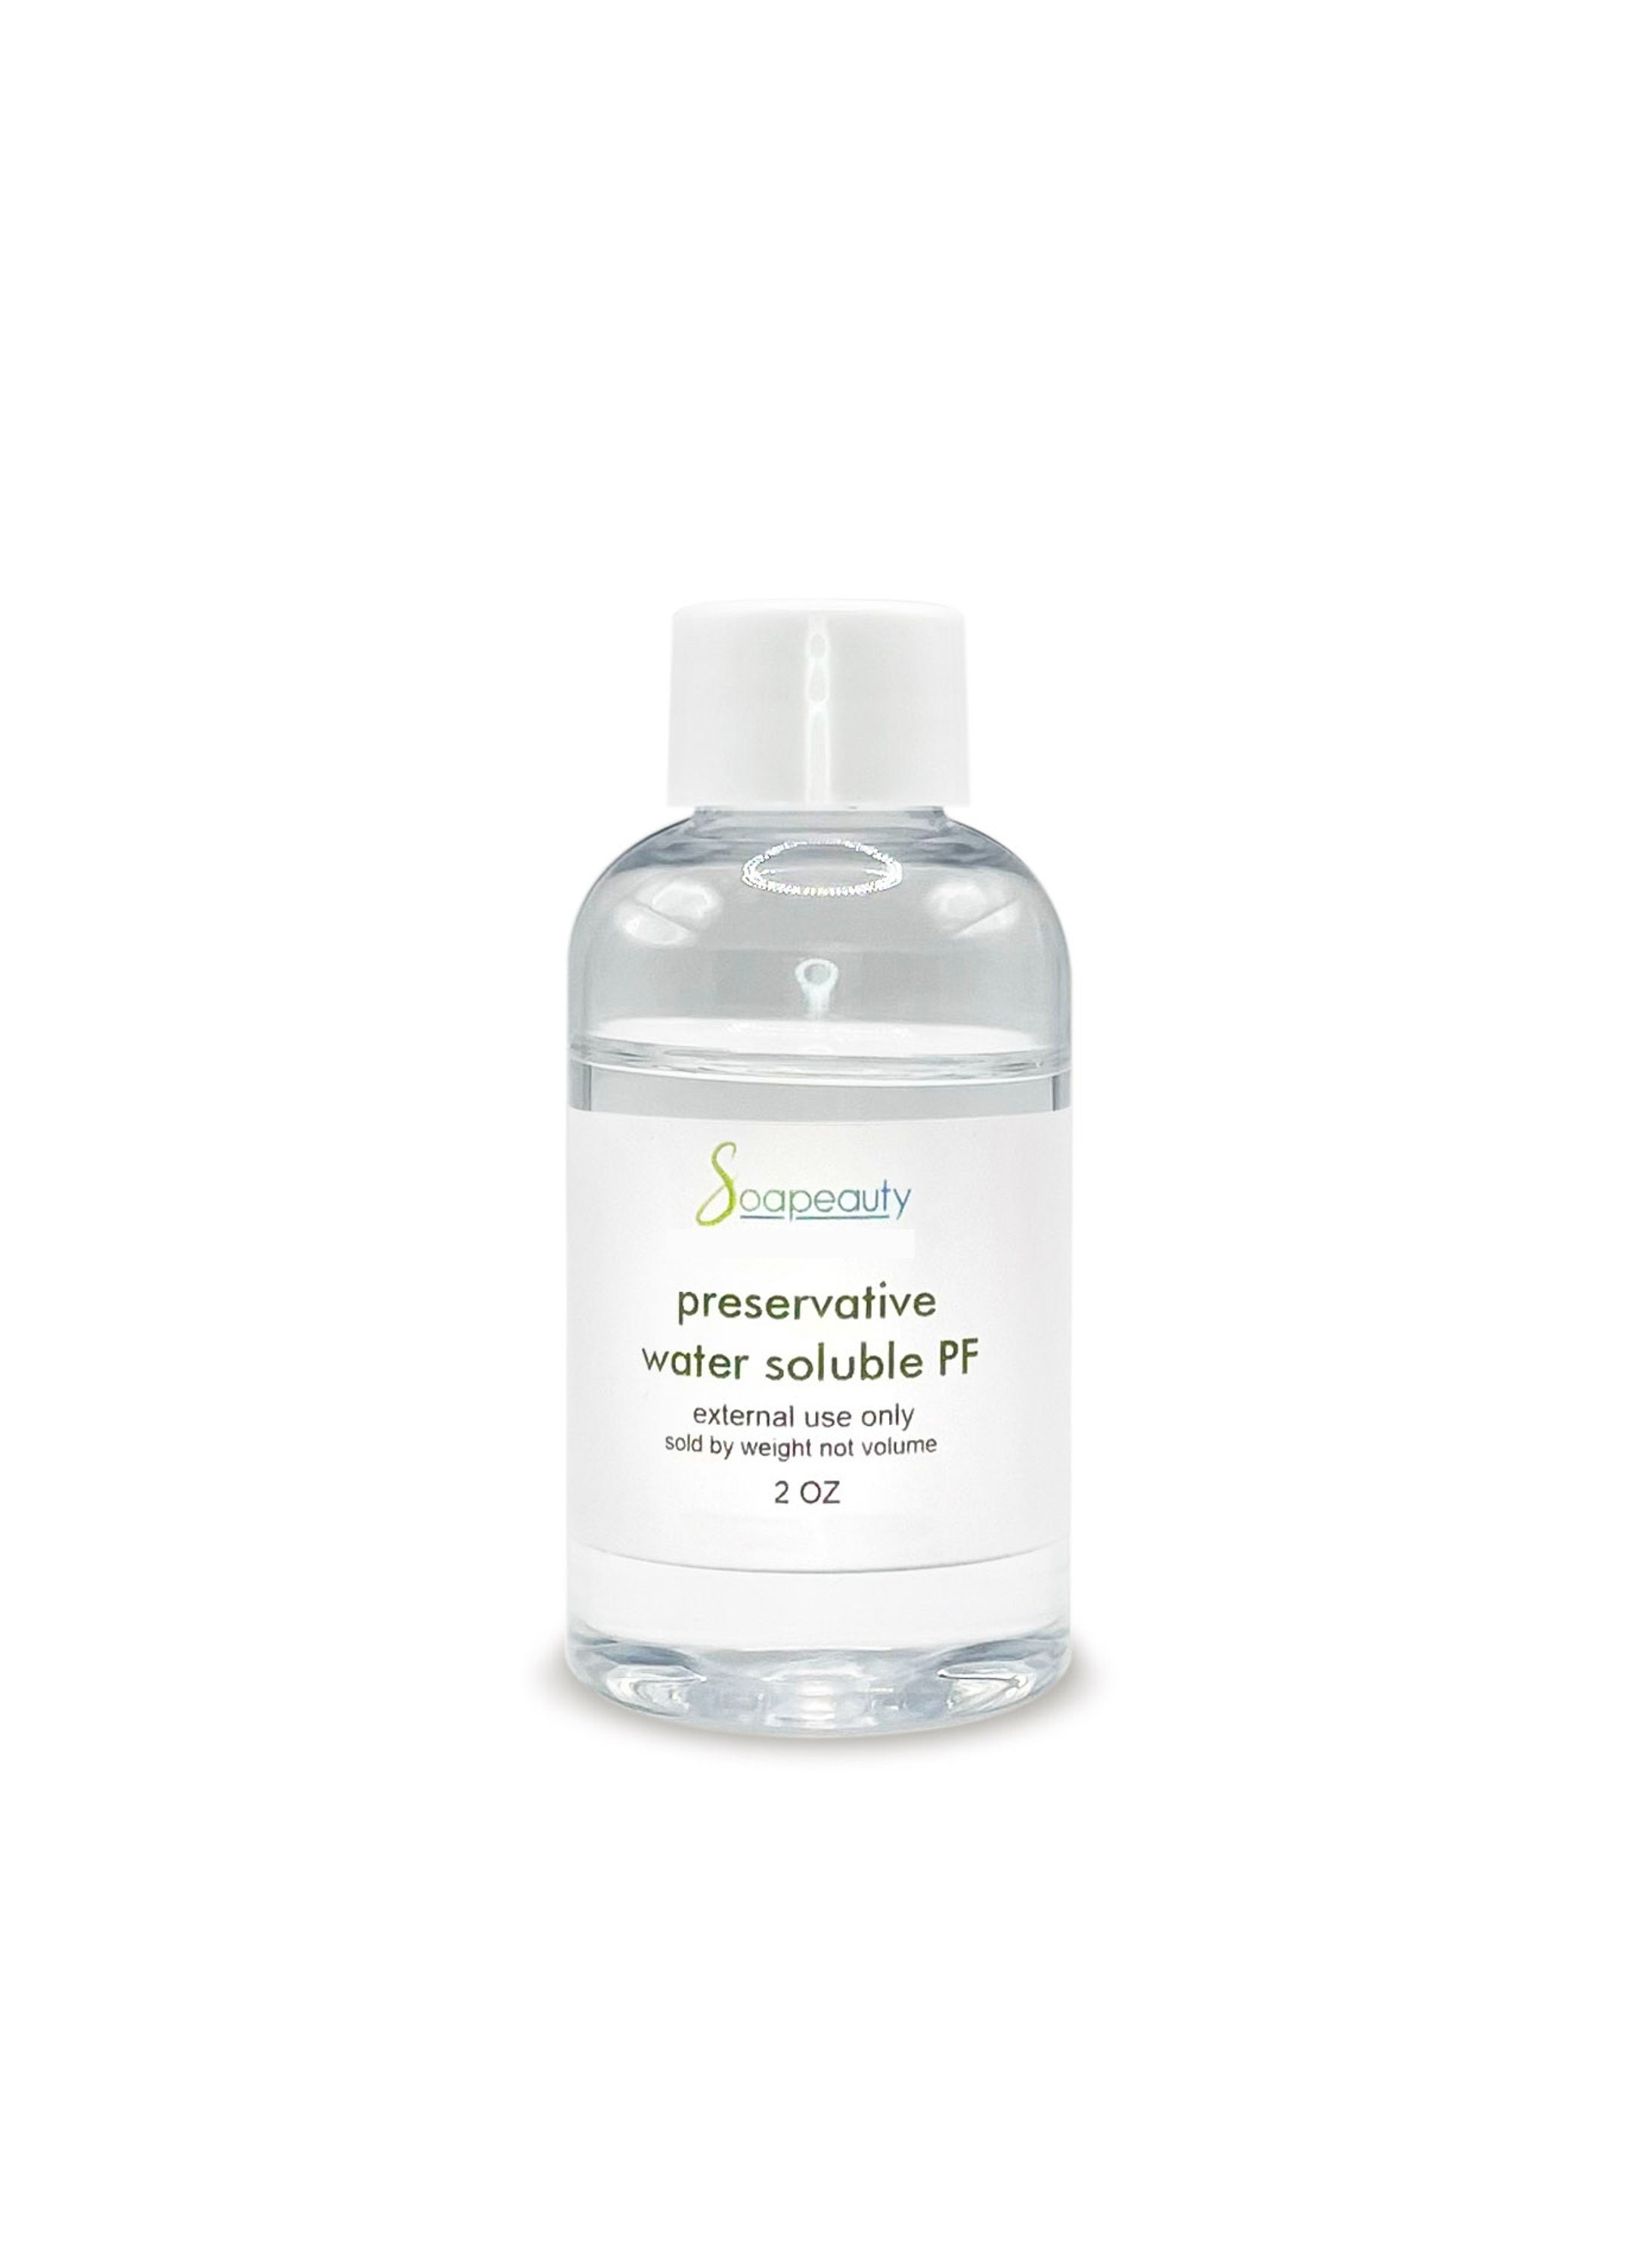 Leucidal Liquid SF > Preservatives, Antioxidants, & Chelating